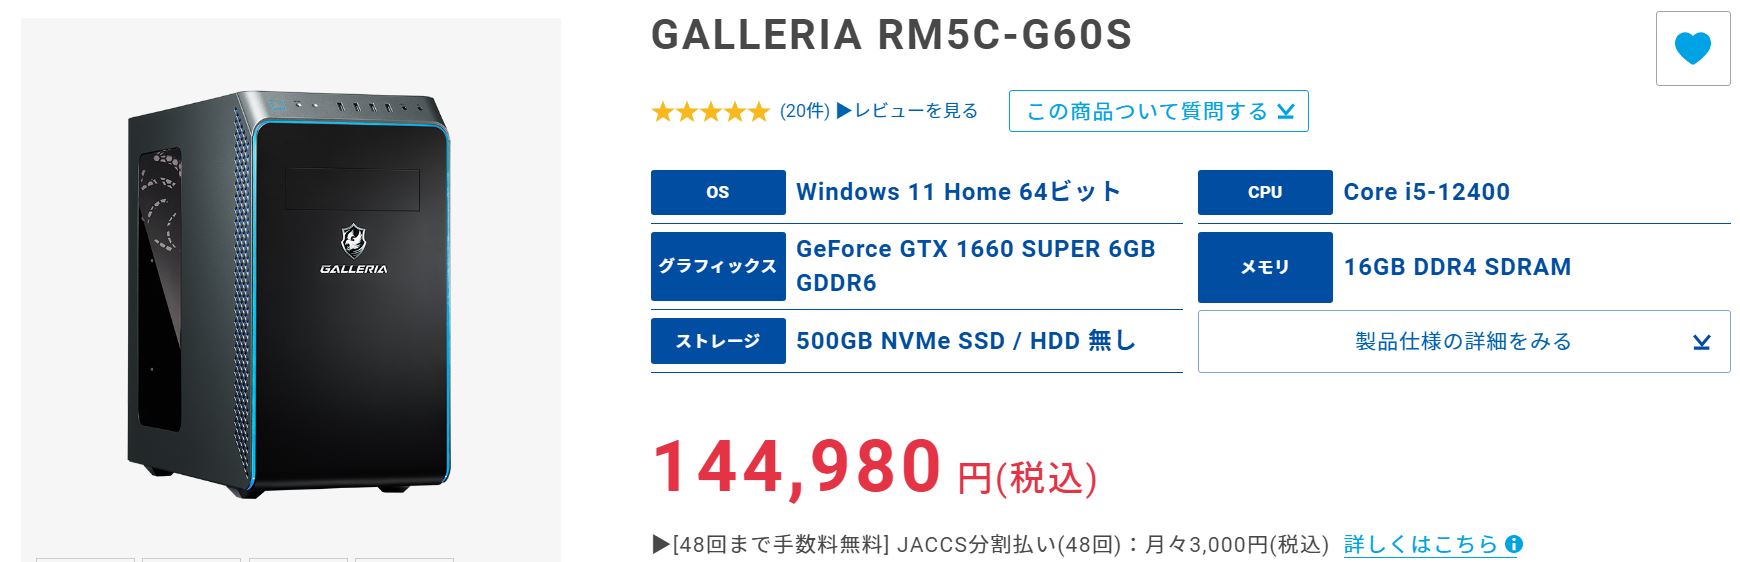 GALLERIA RM5C-G60S の性能レビューと評価【ドスパラ】 - がじぇけん